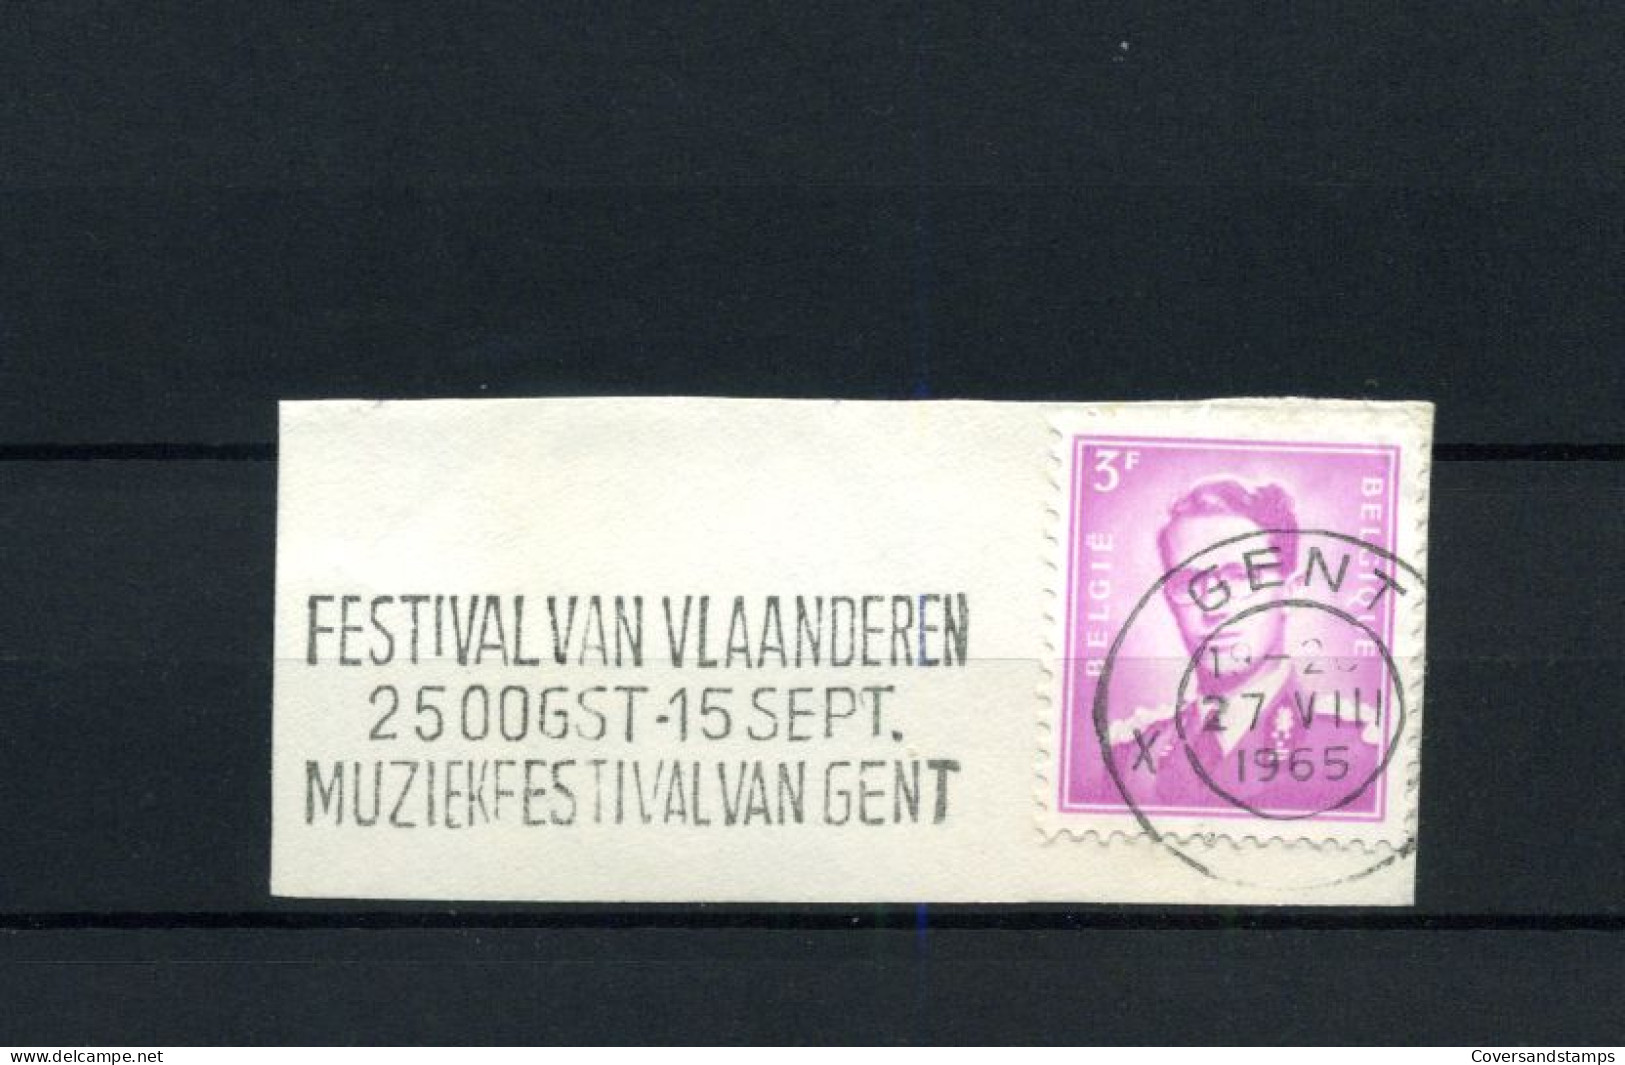 Vlagstempel  / Flamme : "Festival Van Vlaanderen 25 Oogst-15 Sept Muziekfestival Van Gent" - Fragment - Vlagstempels